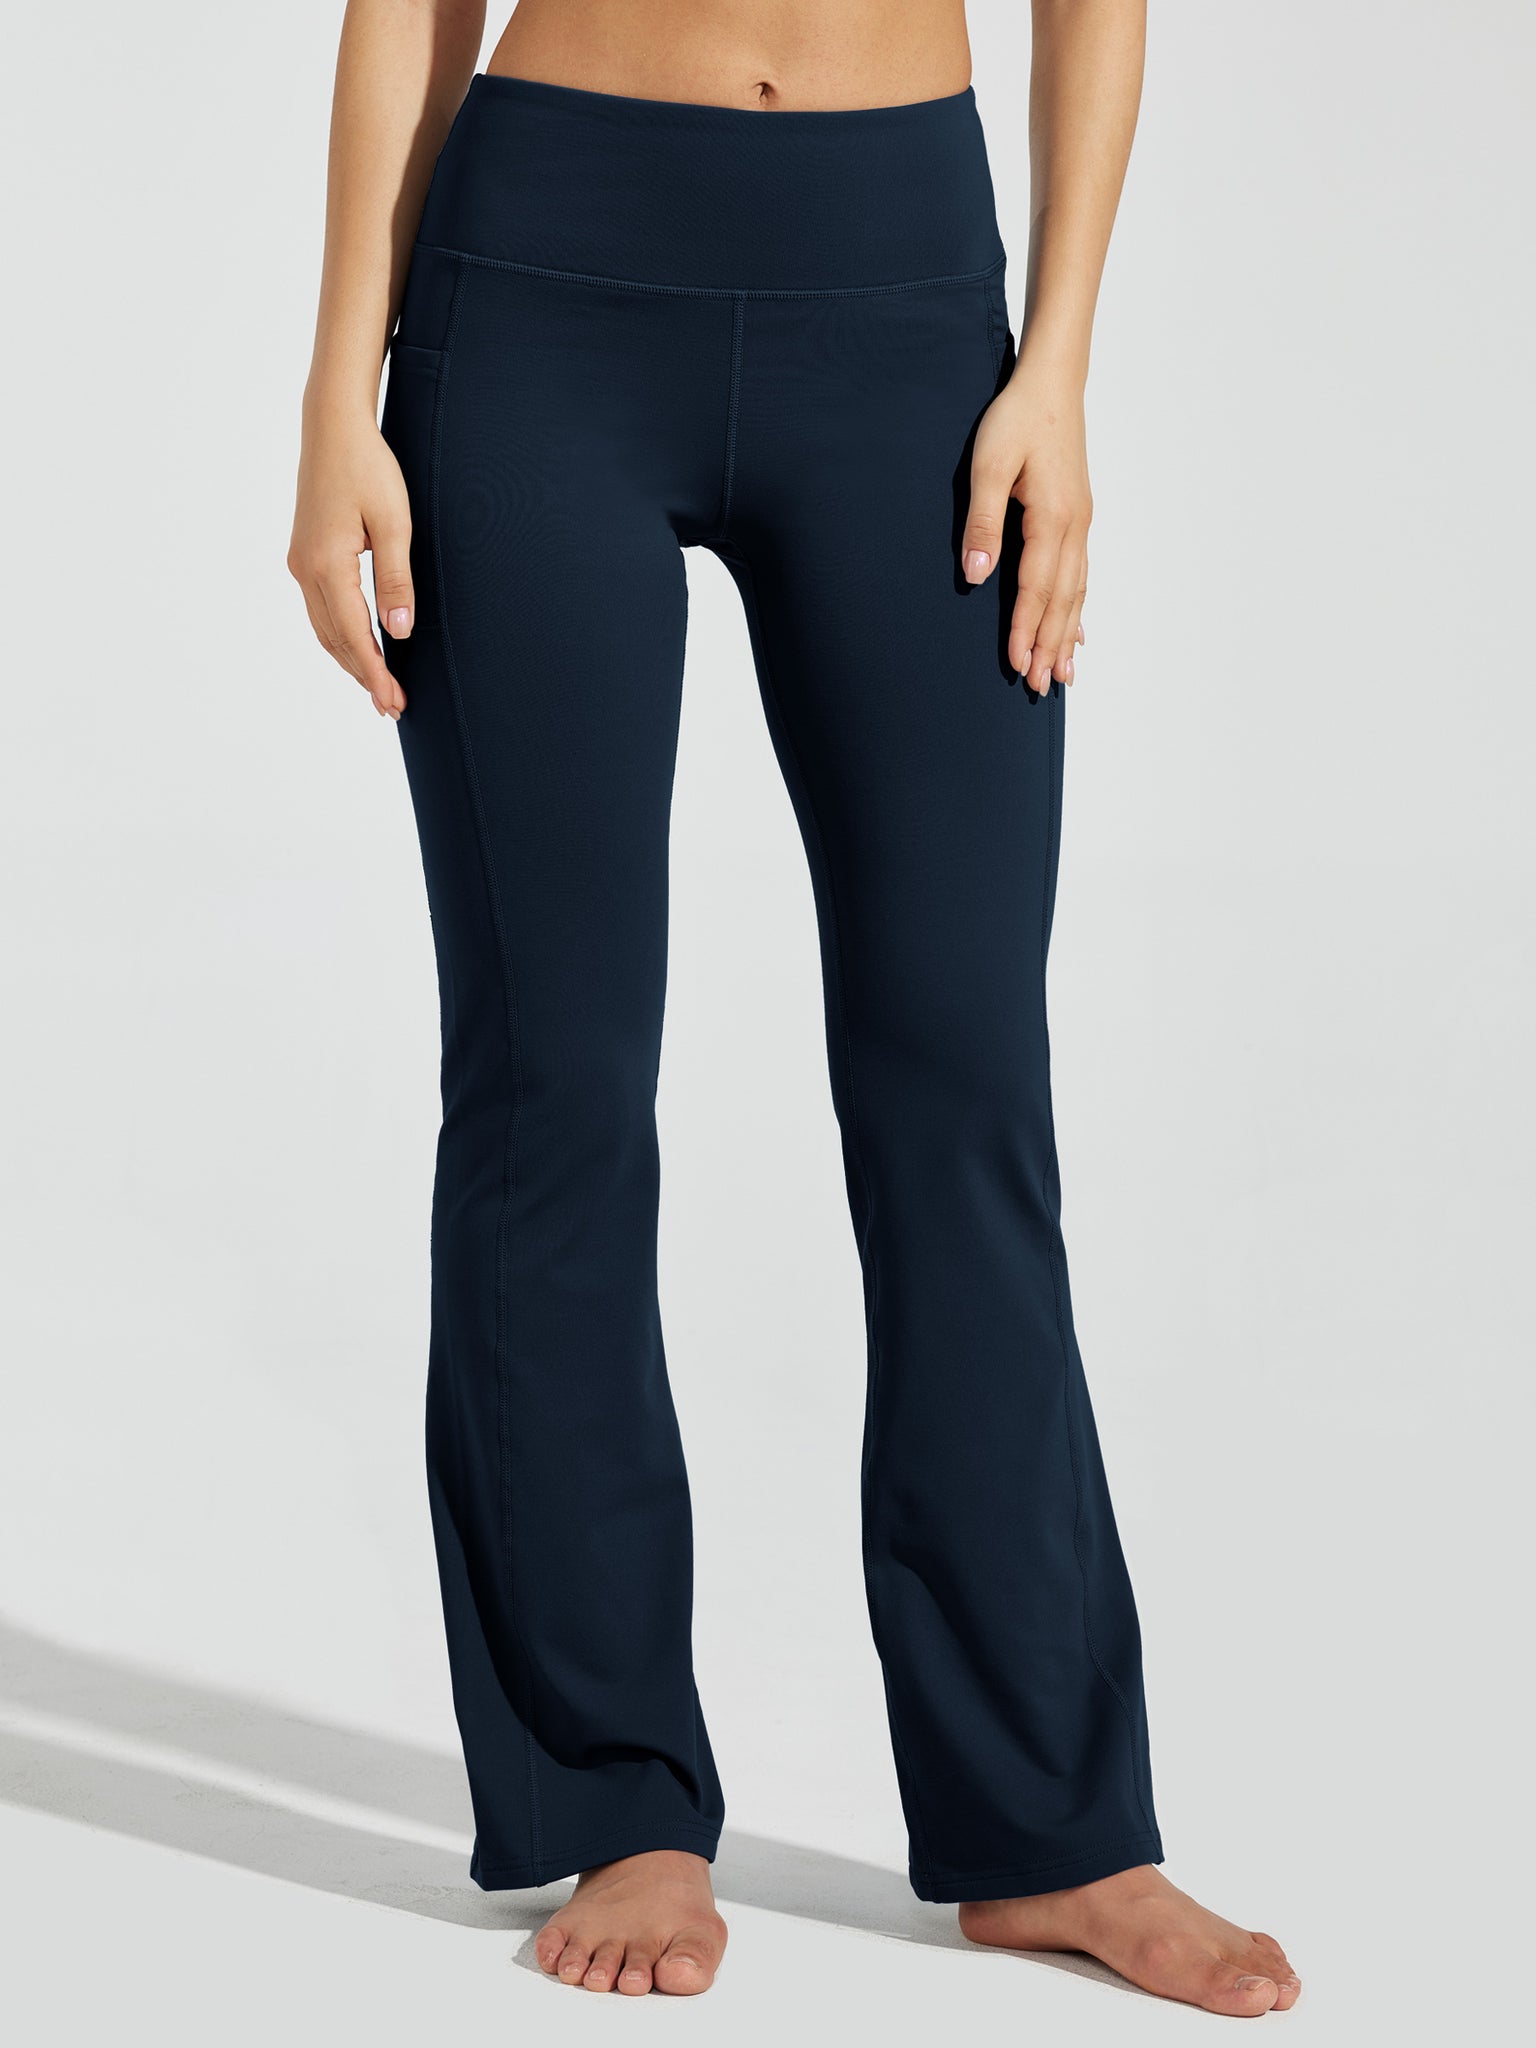 Women's Fleece Lined Bootcut Yoga Pants_DeepBlue_model2